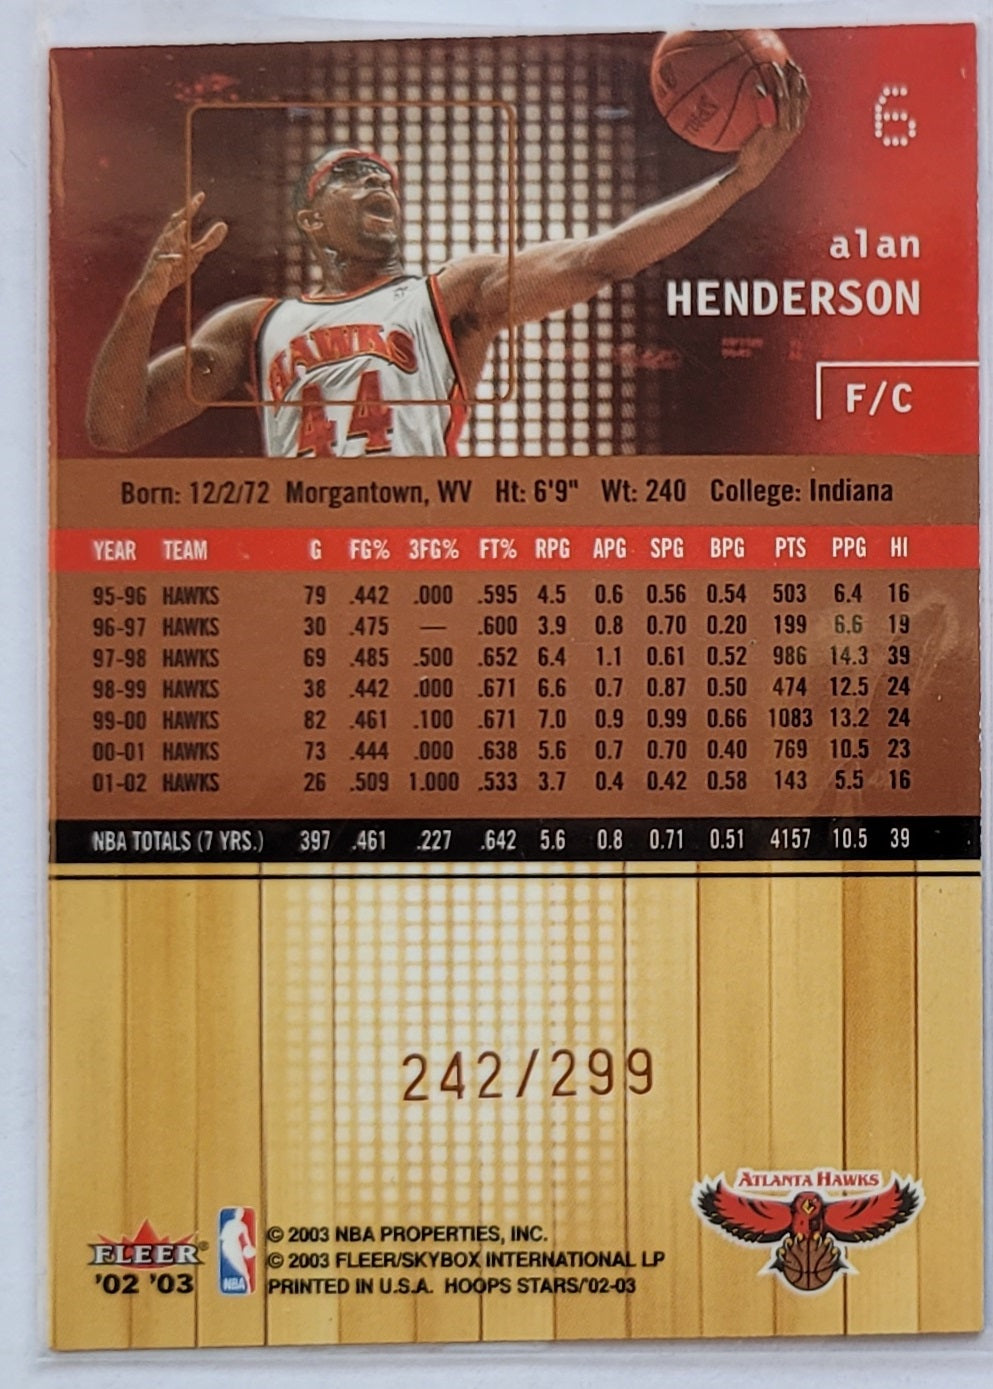 Alan Henderson - 2002-03 Hoops Stars Five-Star #6 - 242/299